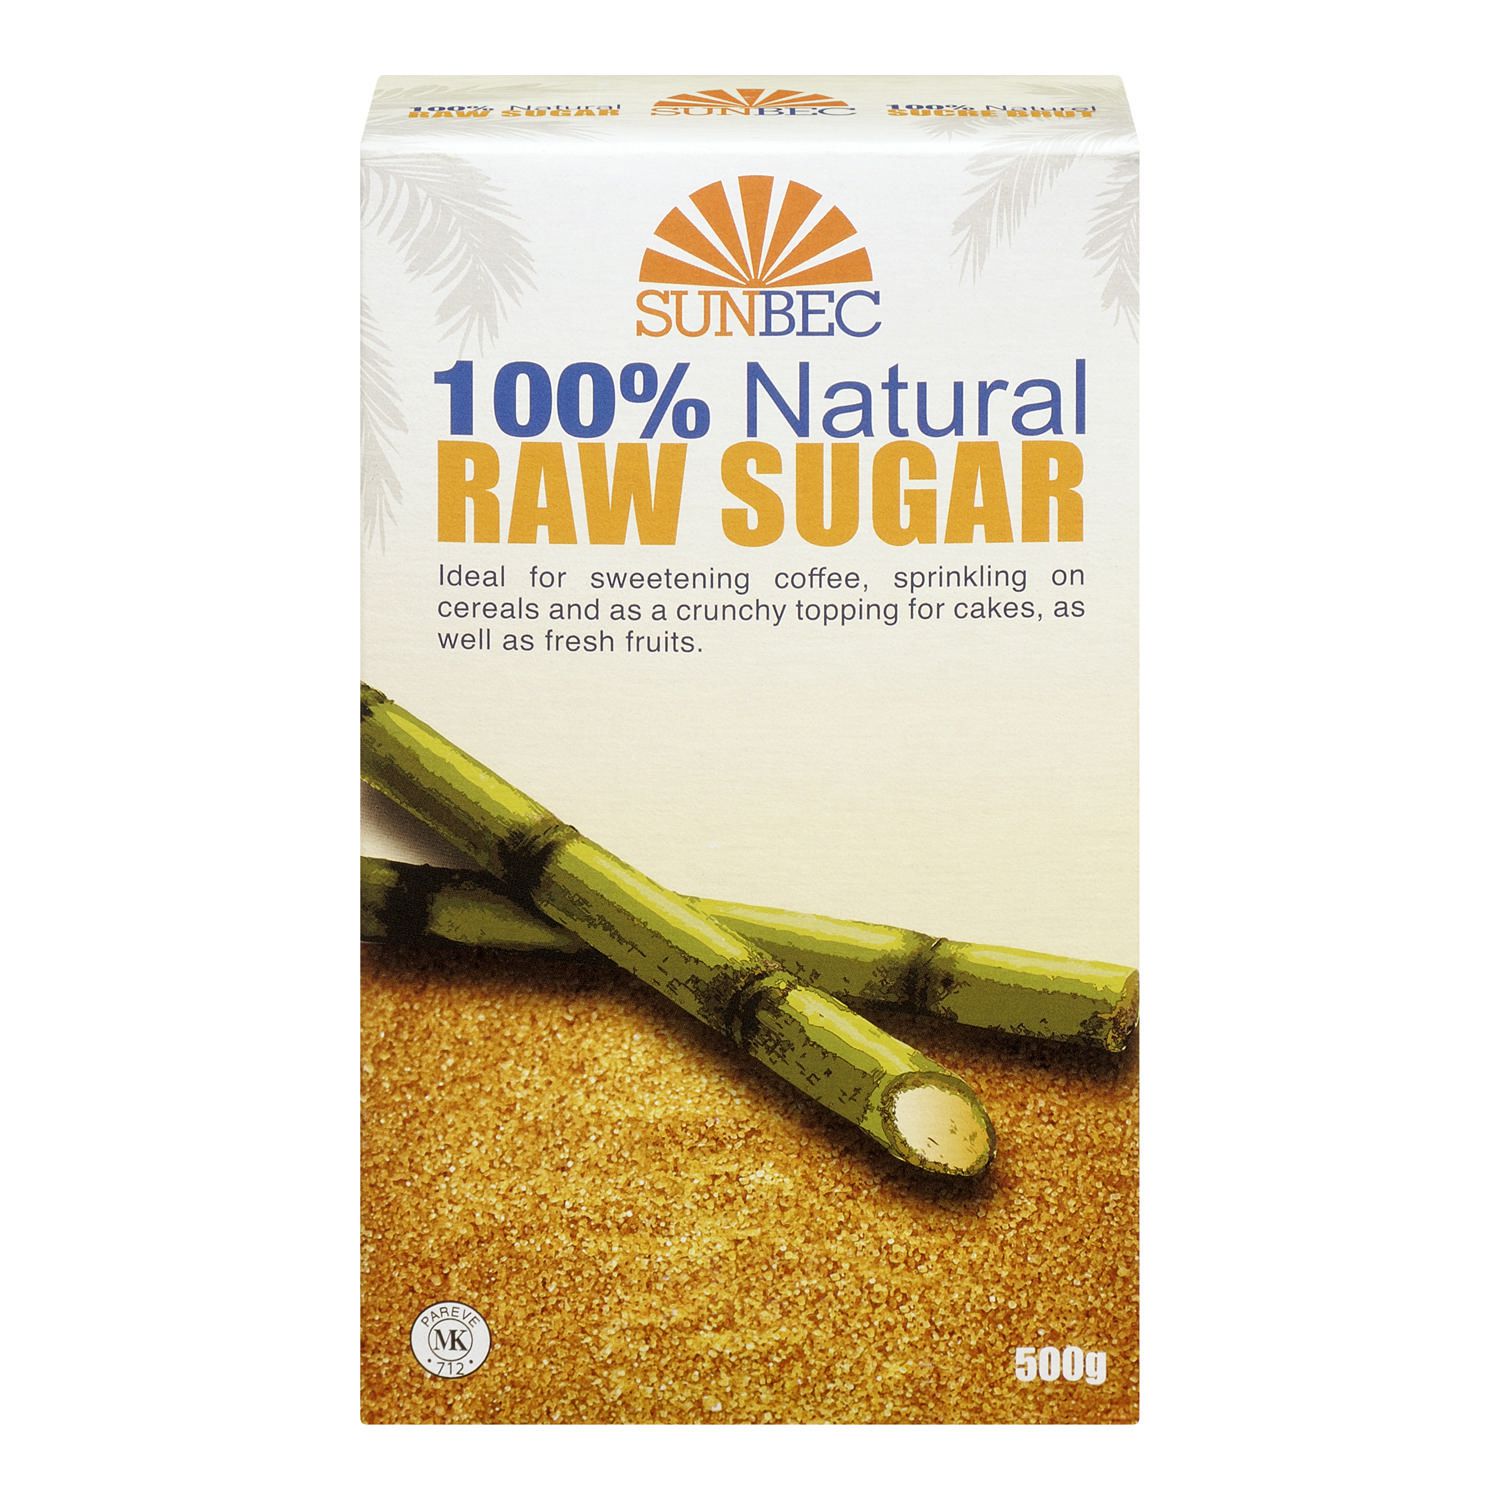 SUNBEC 100% Natural Raw Sugar | Walmart Canada